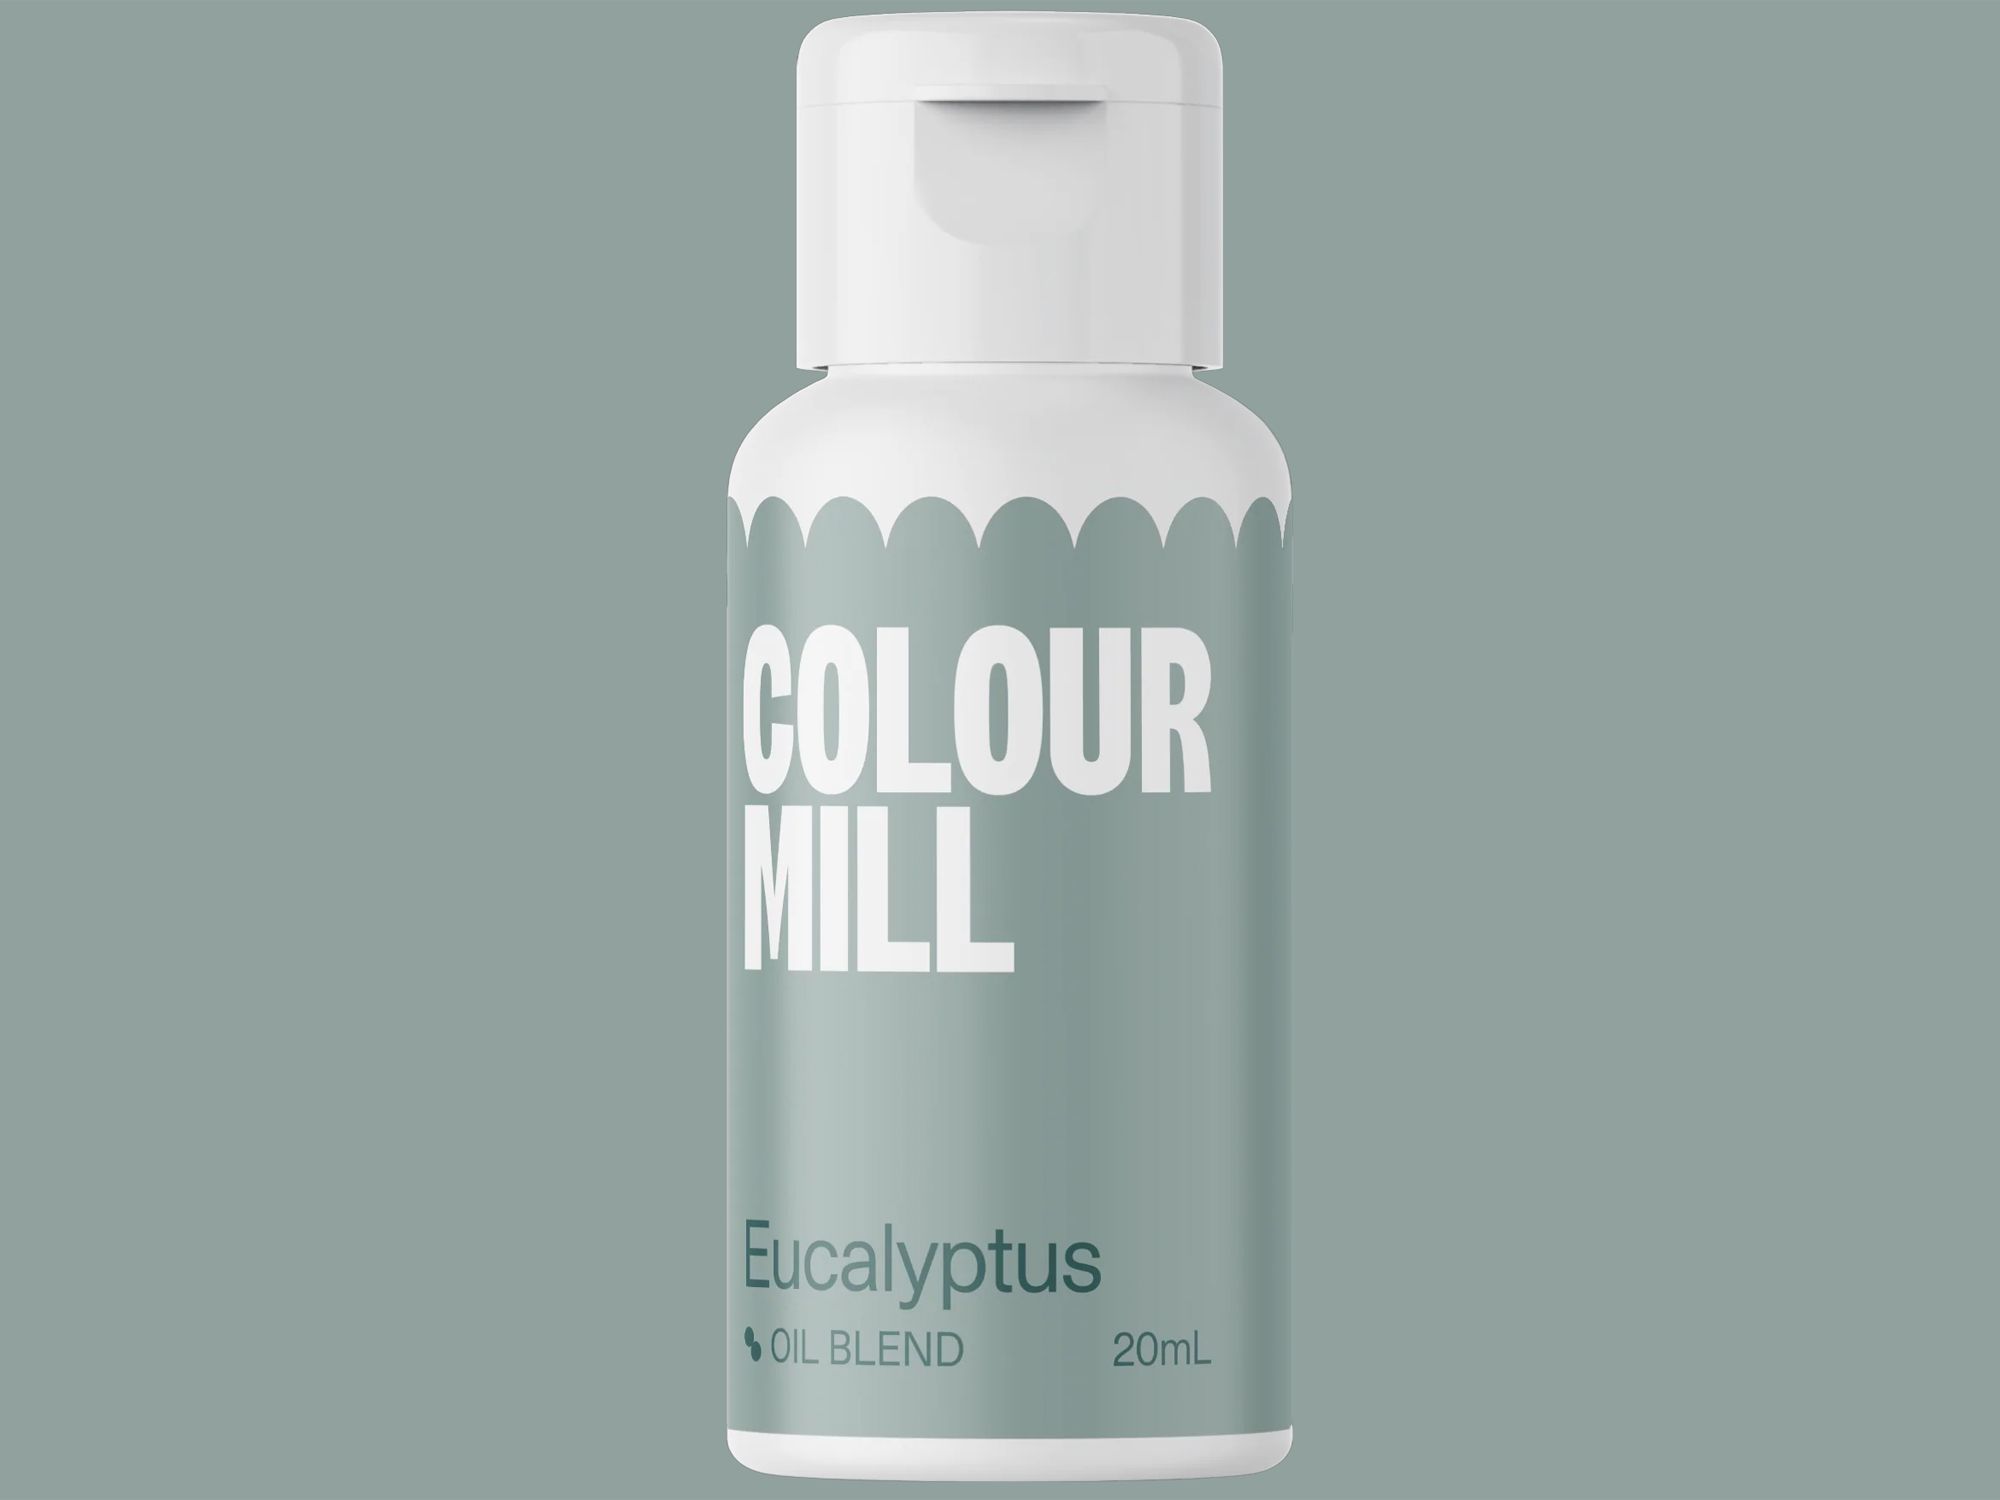 Colour Mill Eucalyptus (Oil Blend) 20ml